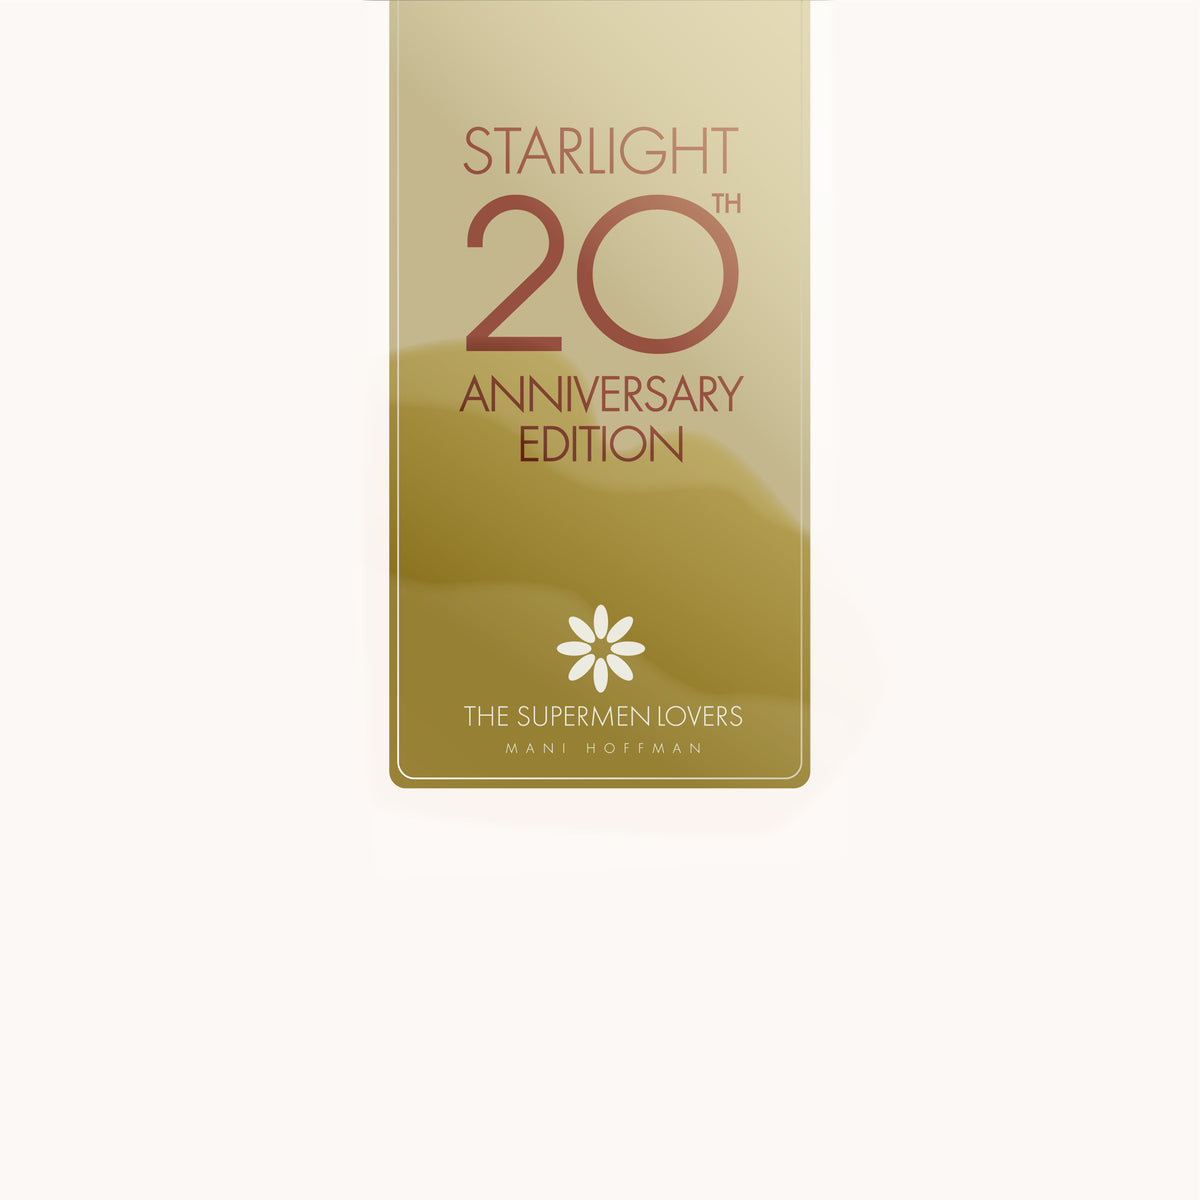 Starlight - 20th Anniversary Edition